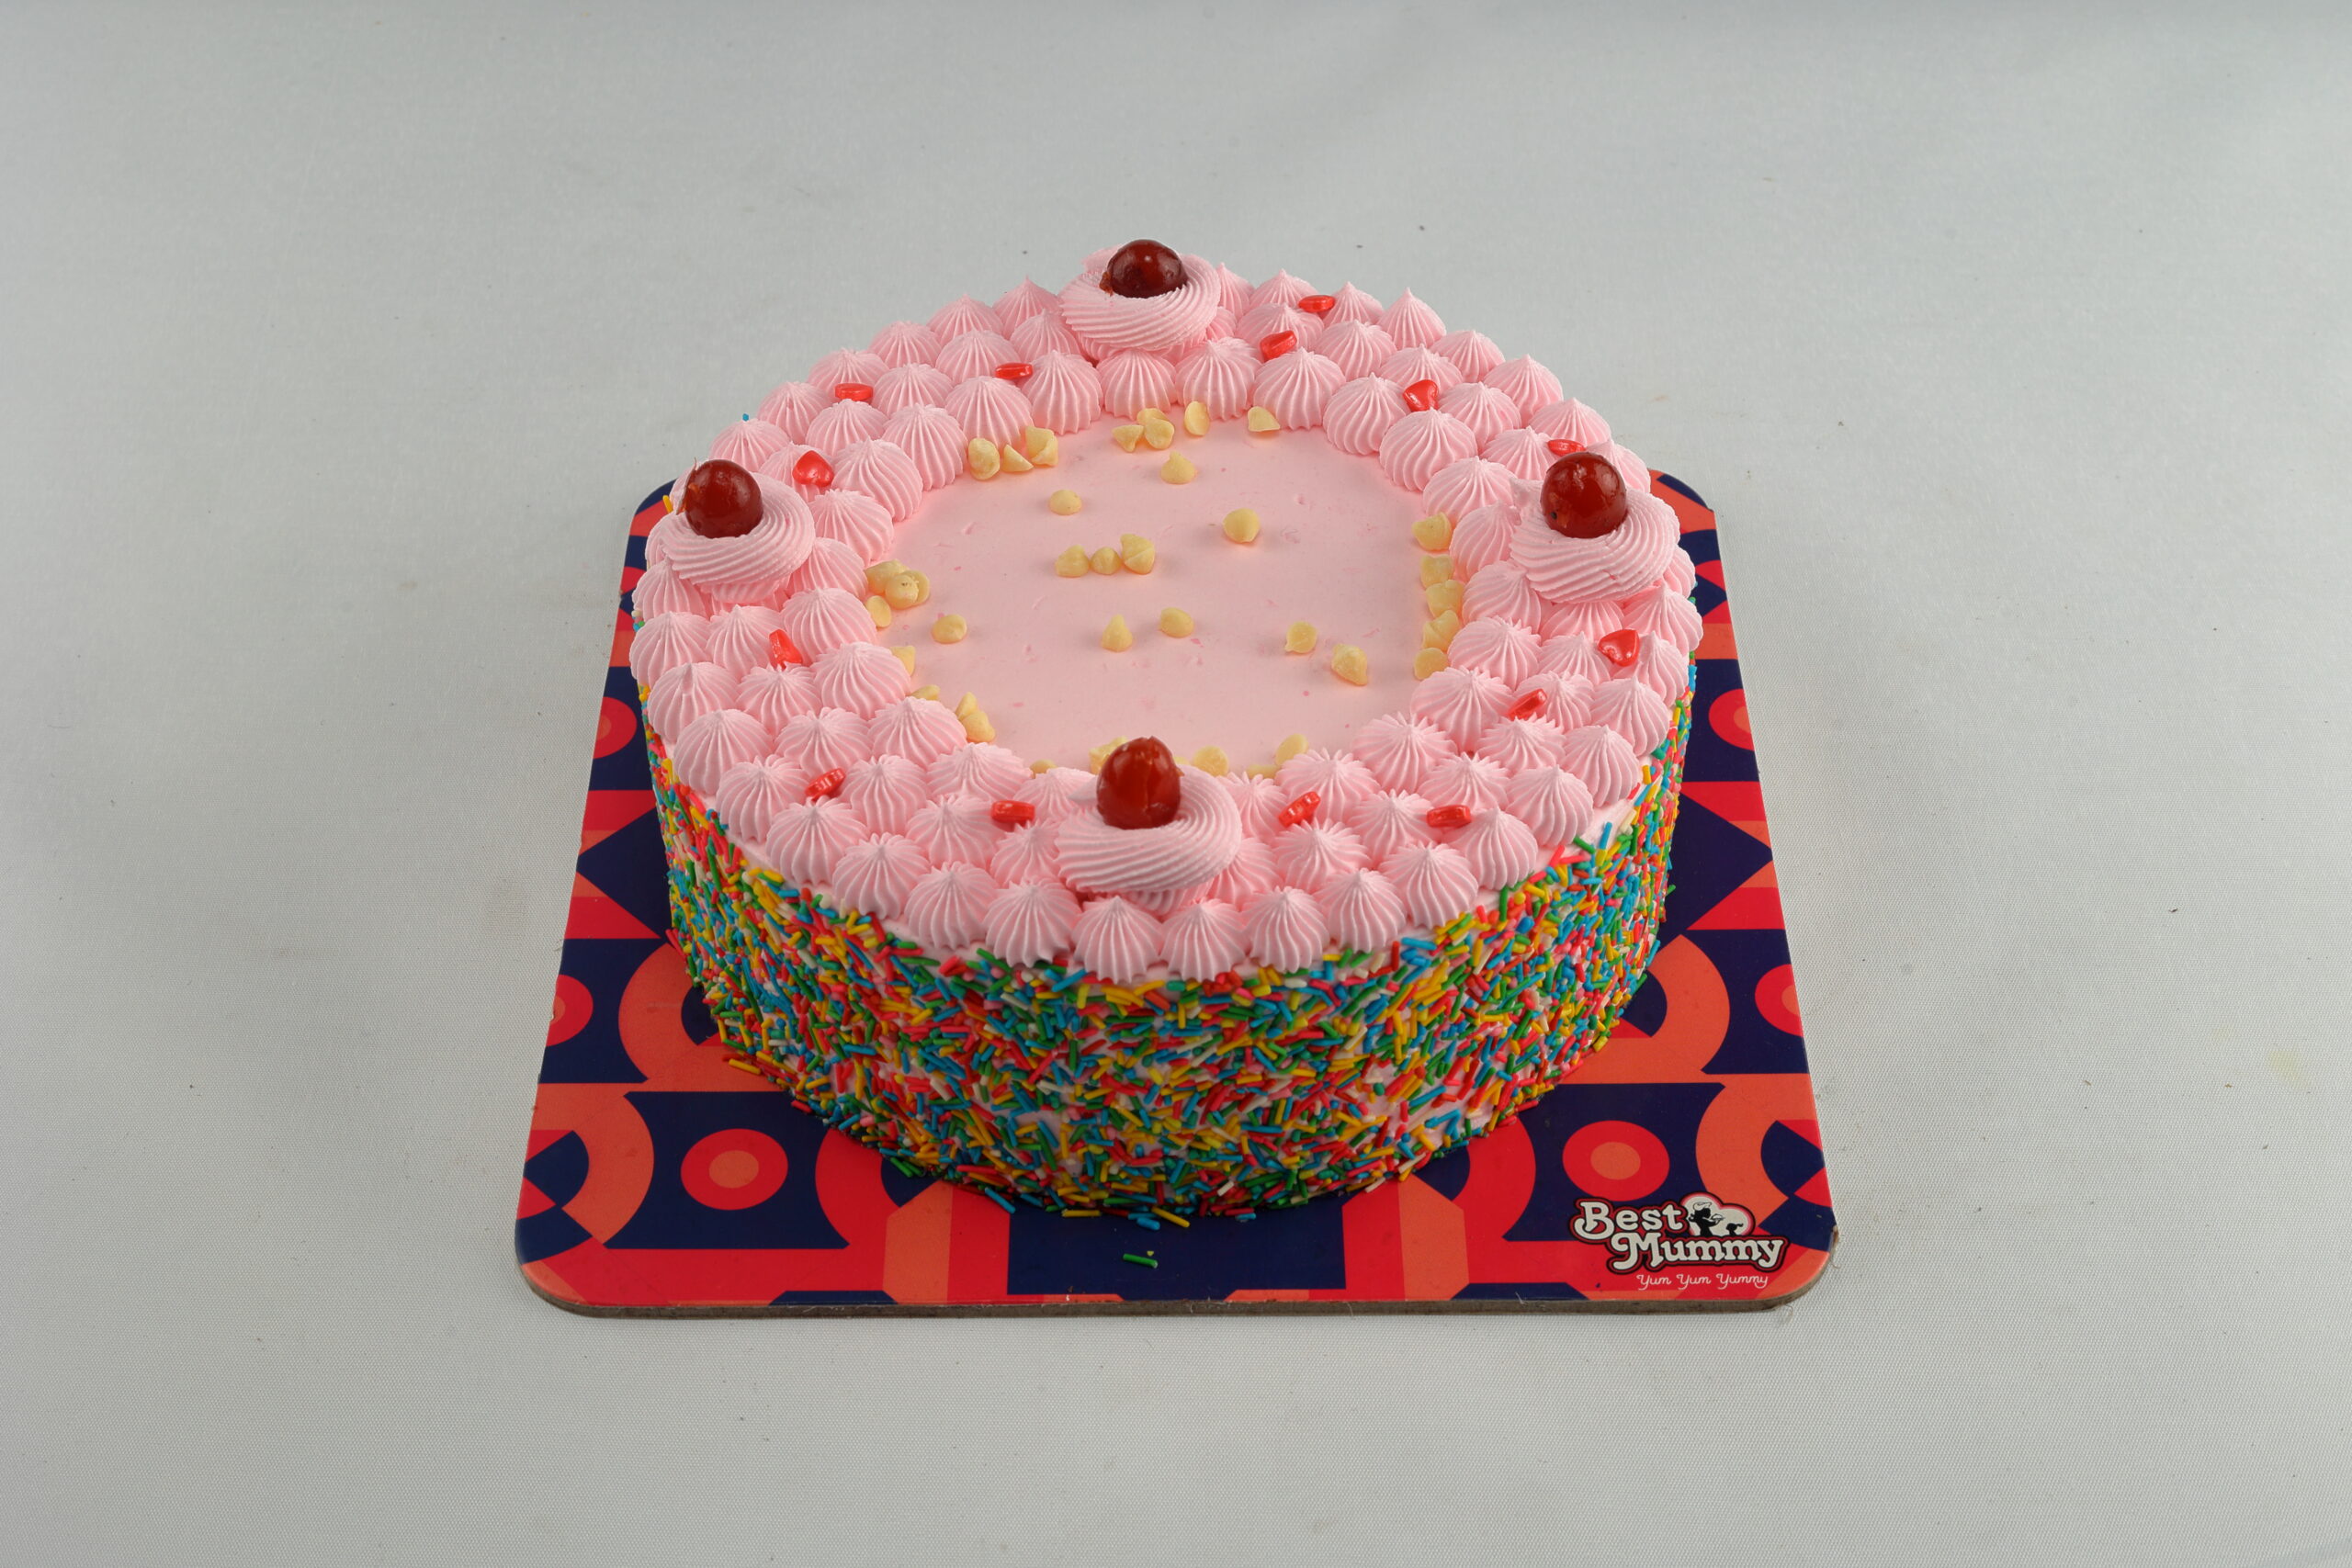 Surprise-Inside Easter Candy Layer Cake Recipe - BettyCrocker.com